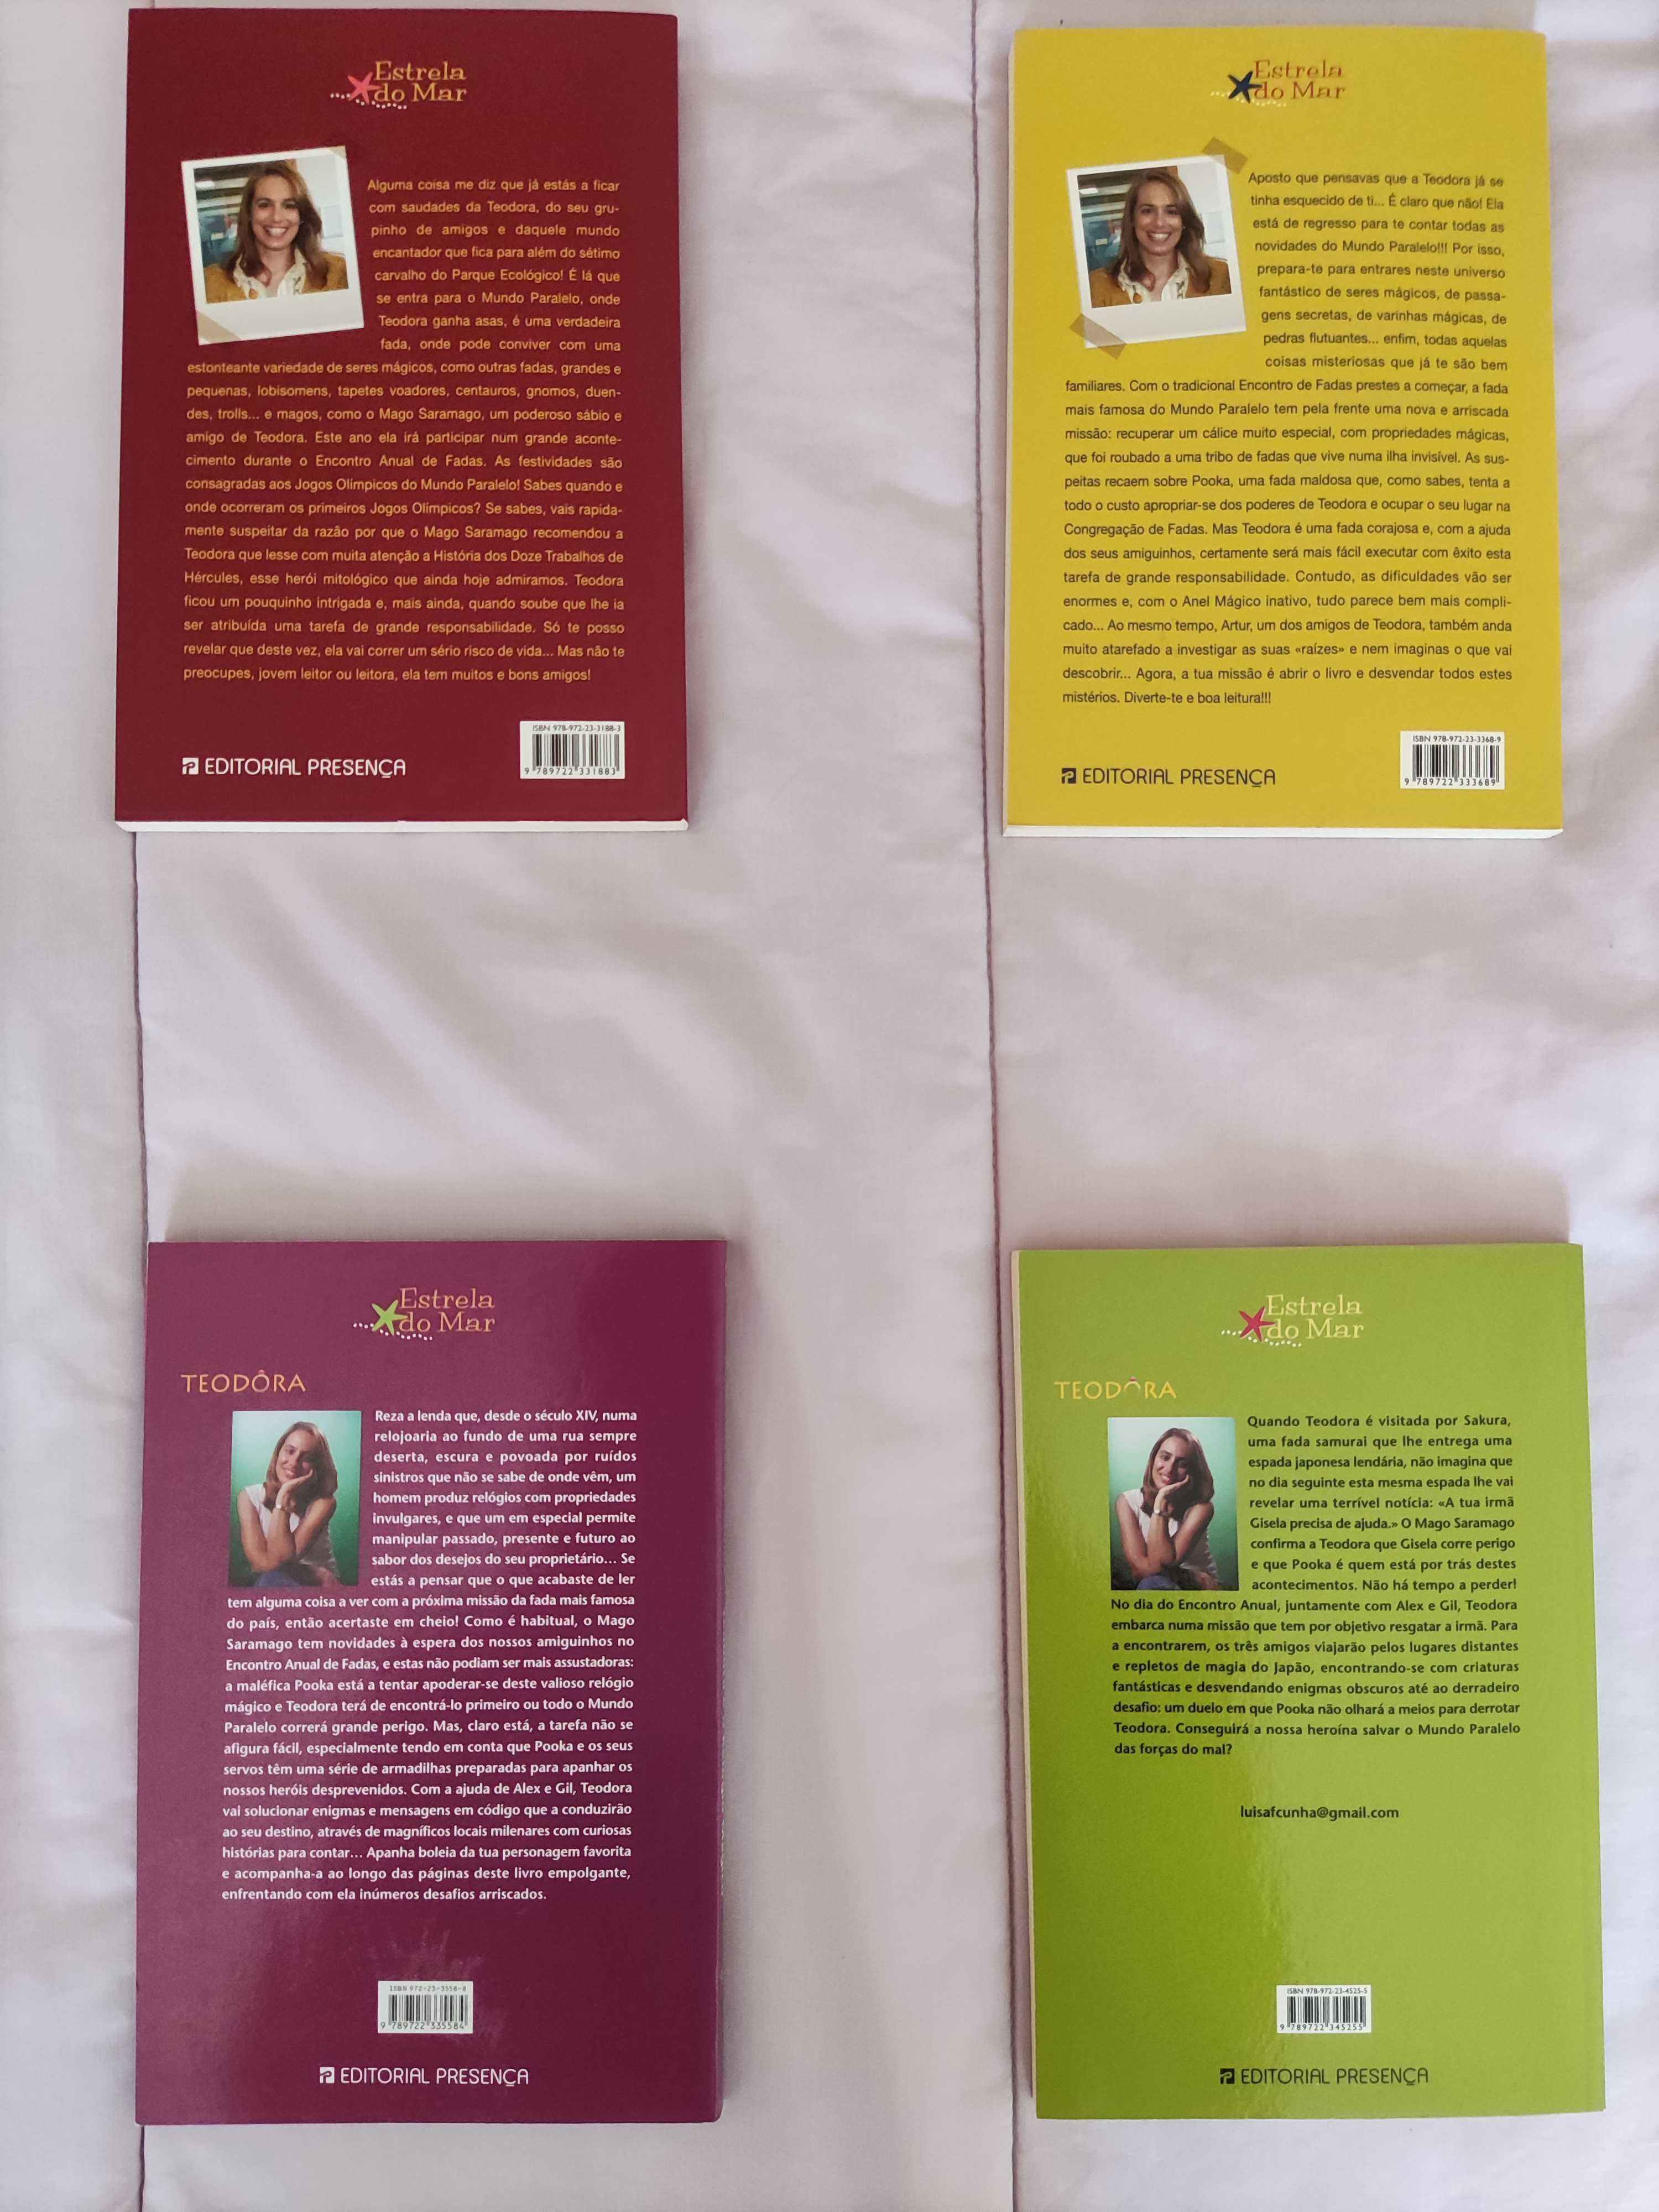 Livros da série Teodora de Luísa Fortes da Cunha